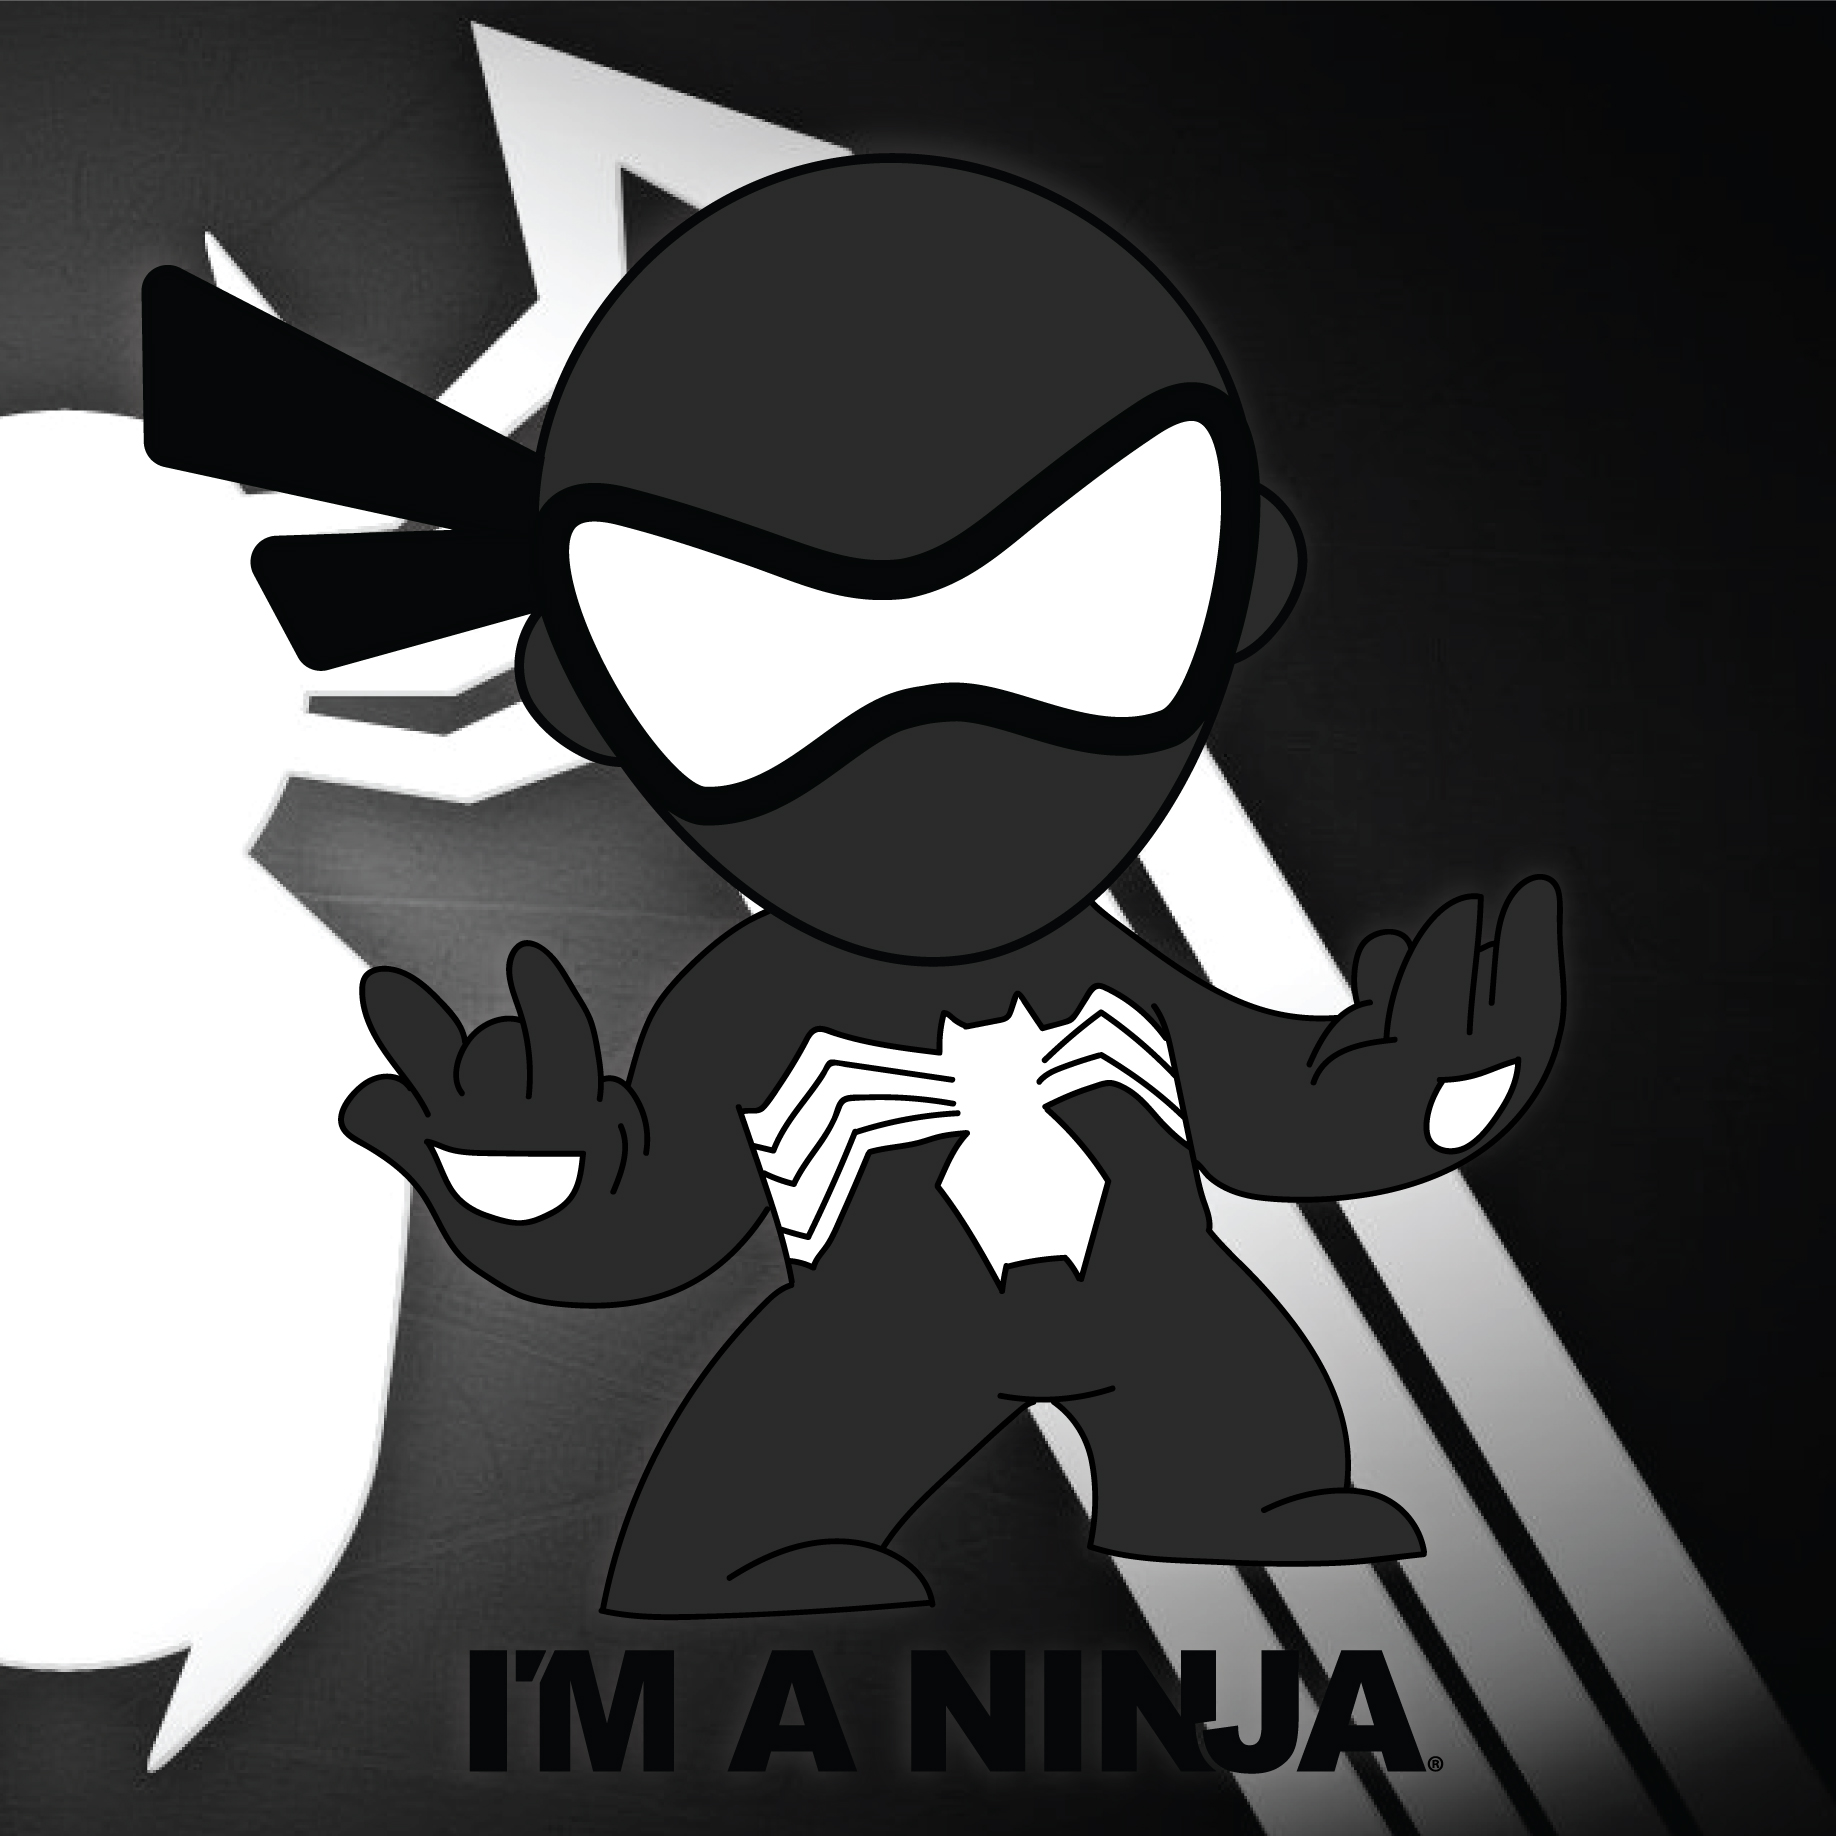 Venom x I'M A NINJA